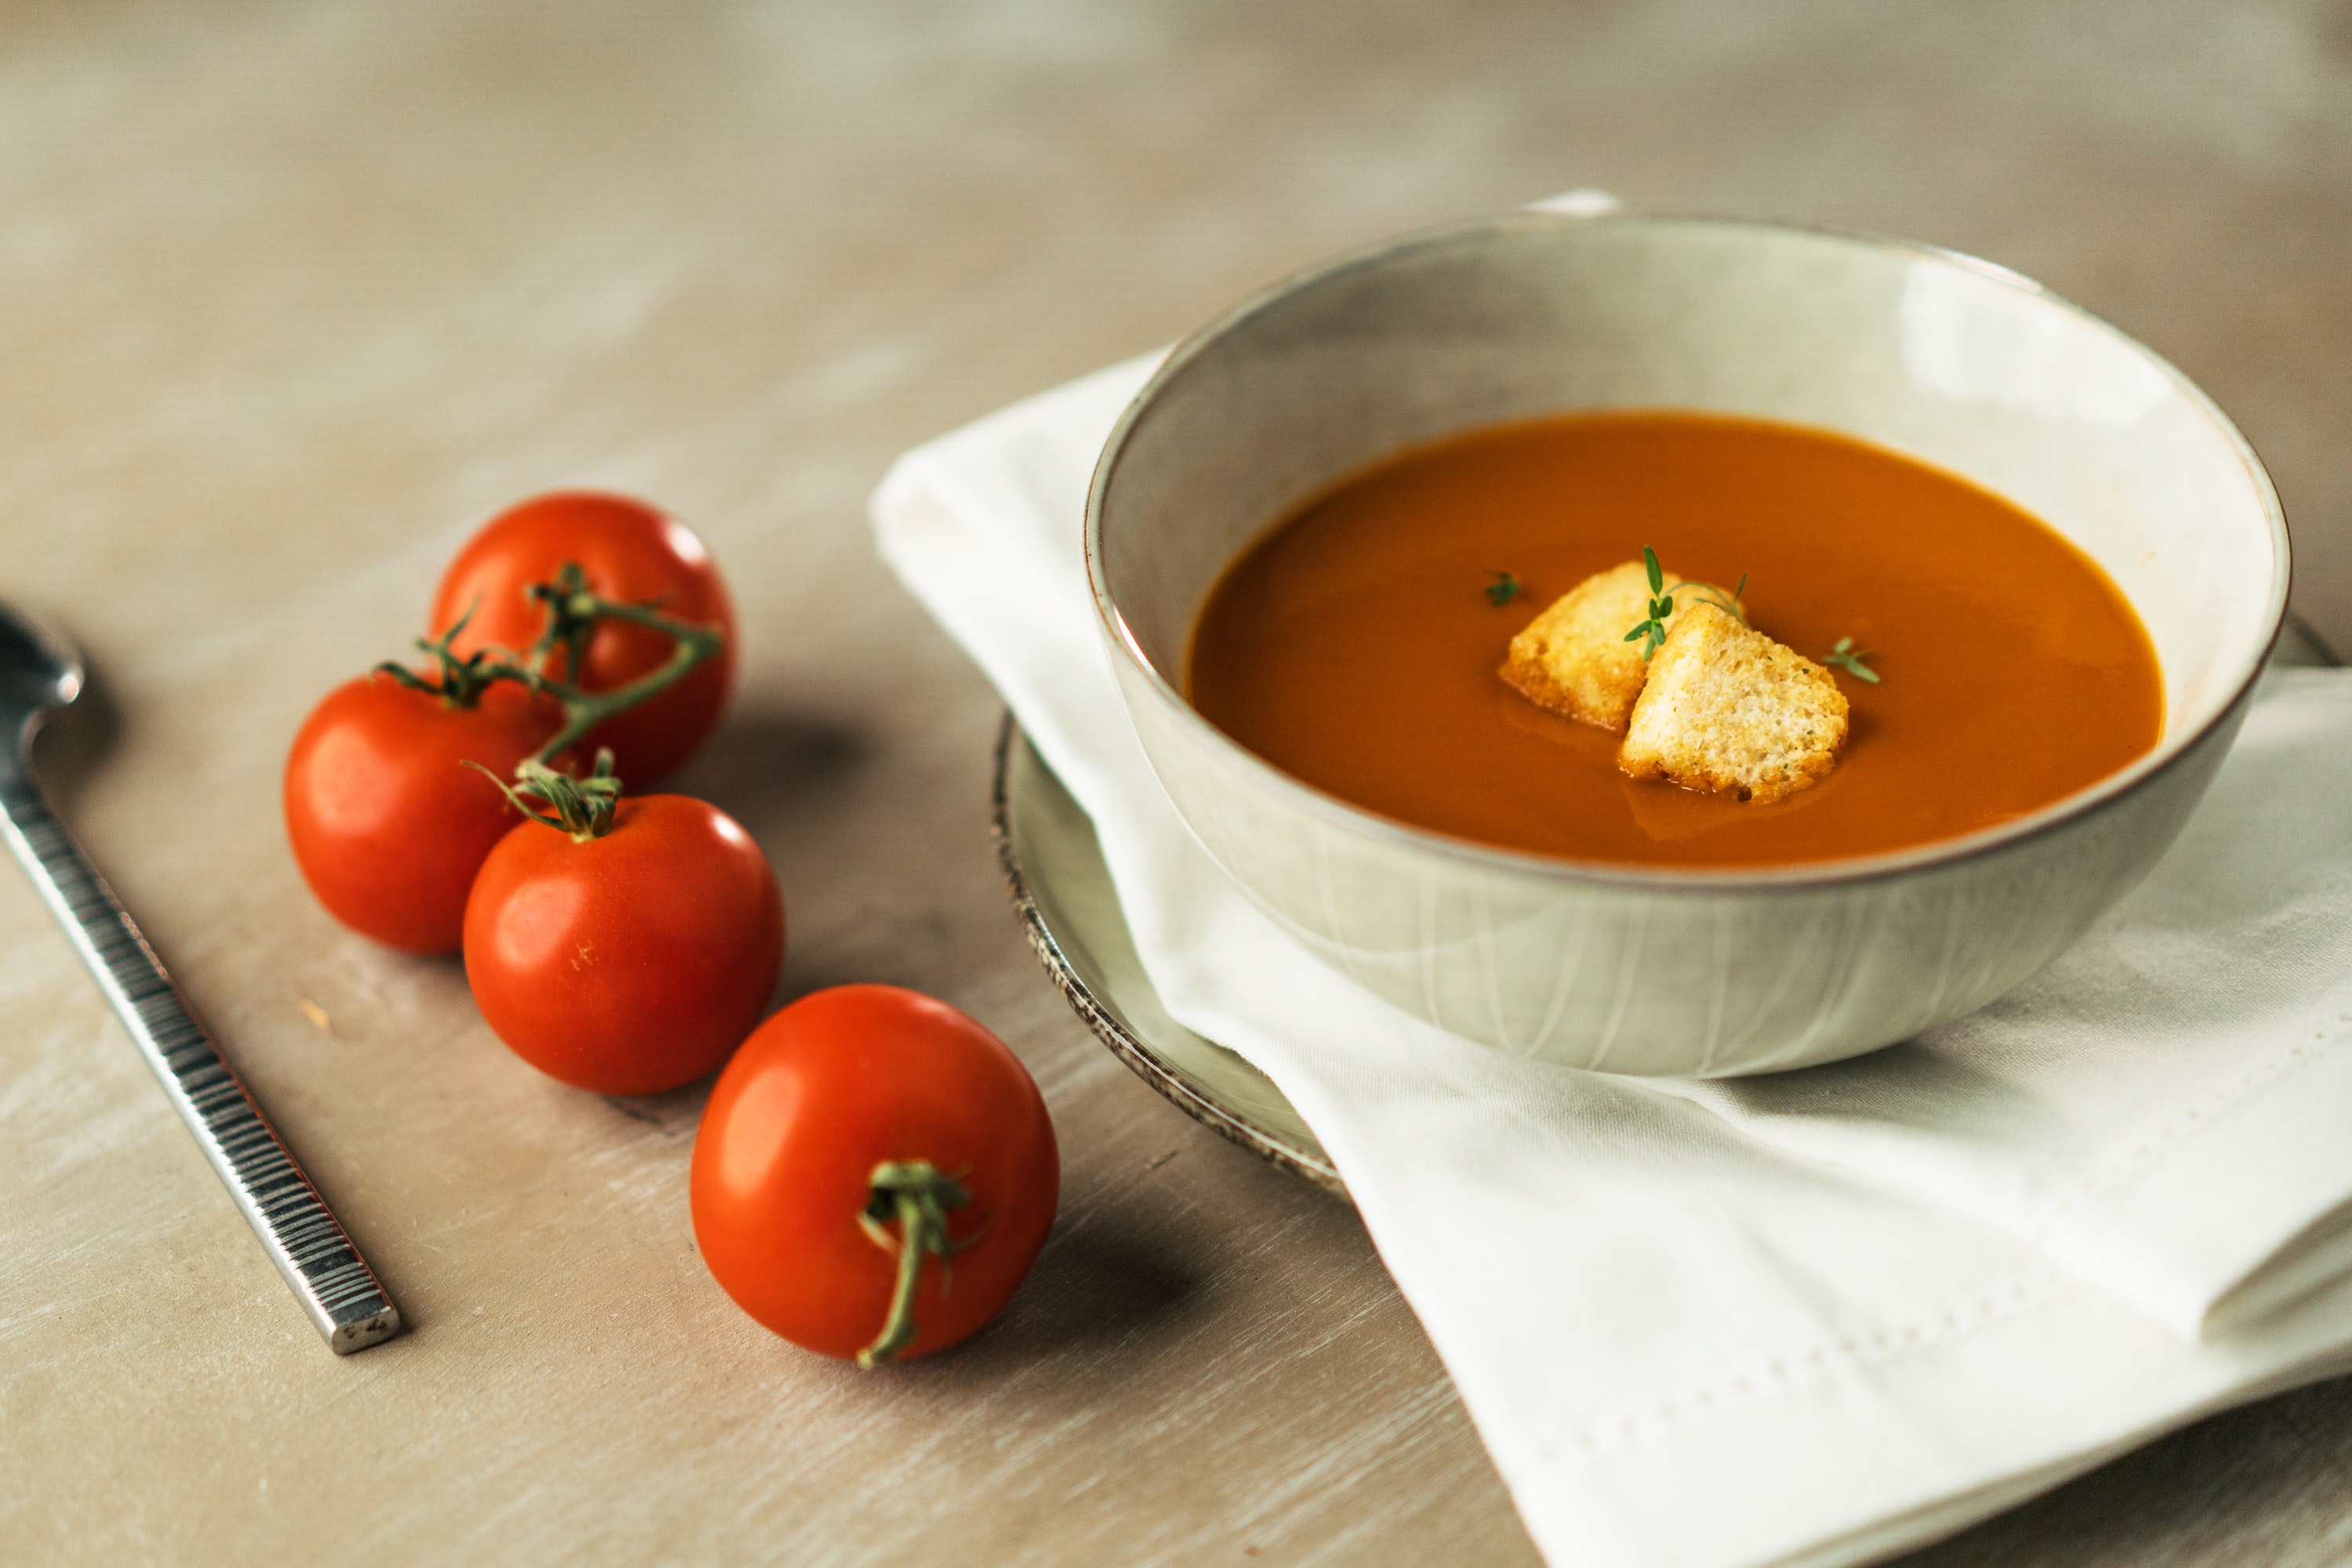 https://capital-brands-llc.imgix.net/recipe-r2297-classic-tomato-soup-fullsize-072729.jpg